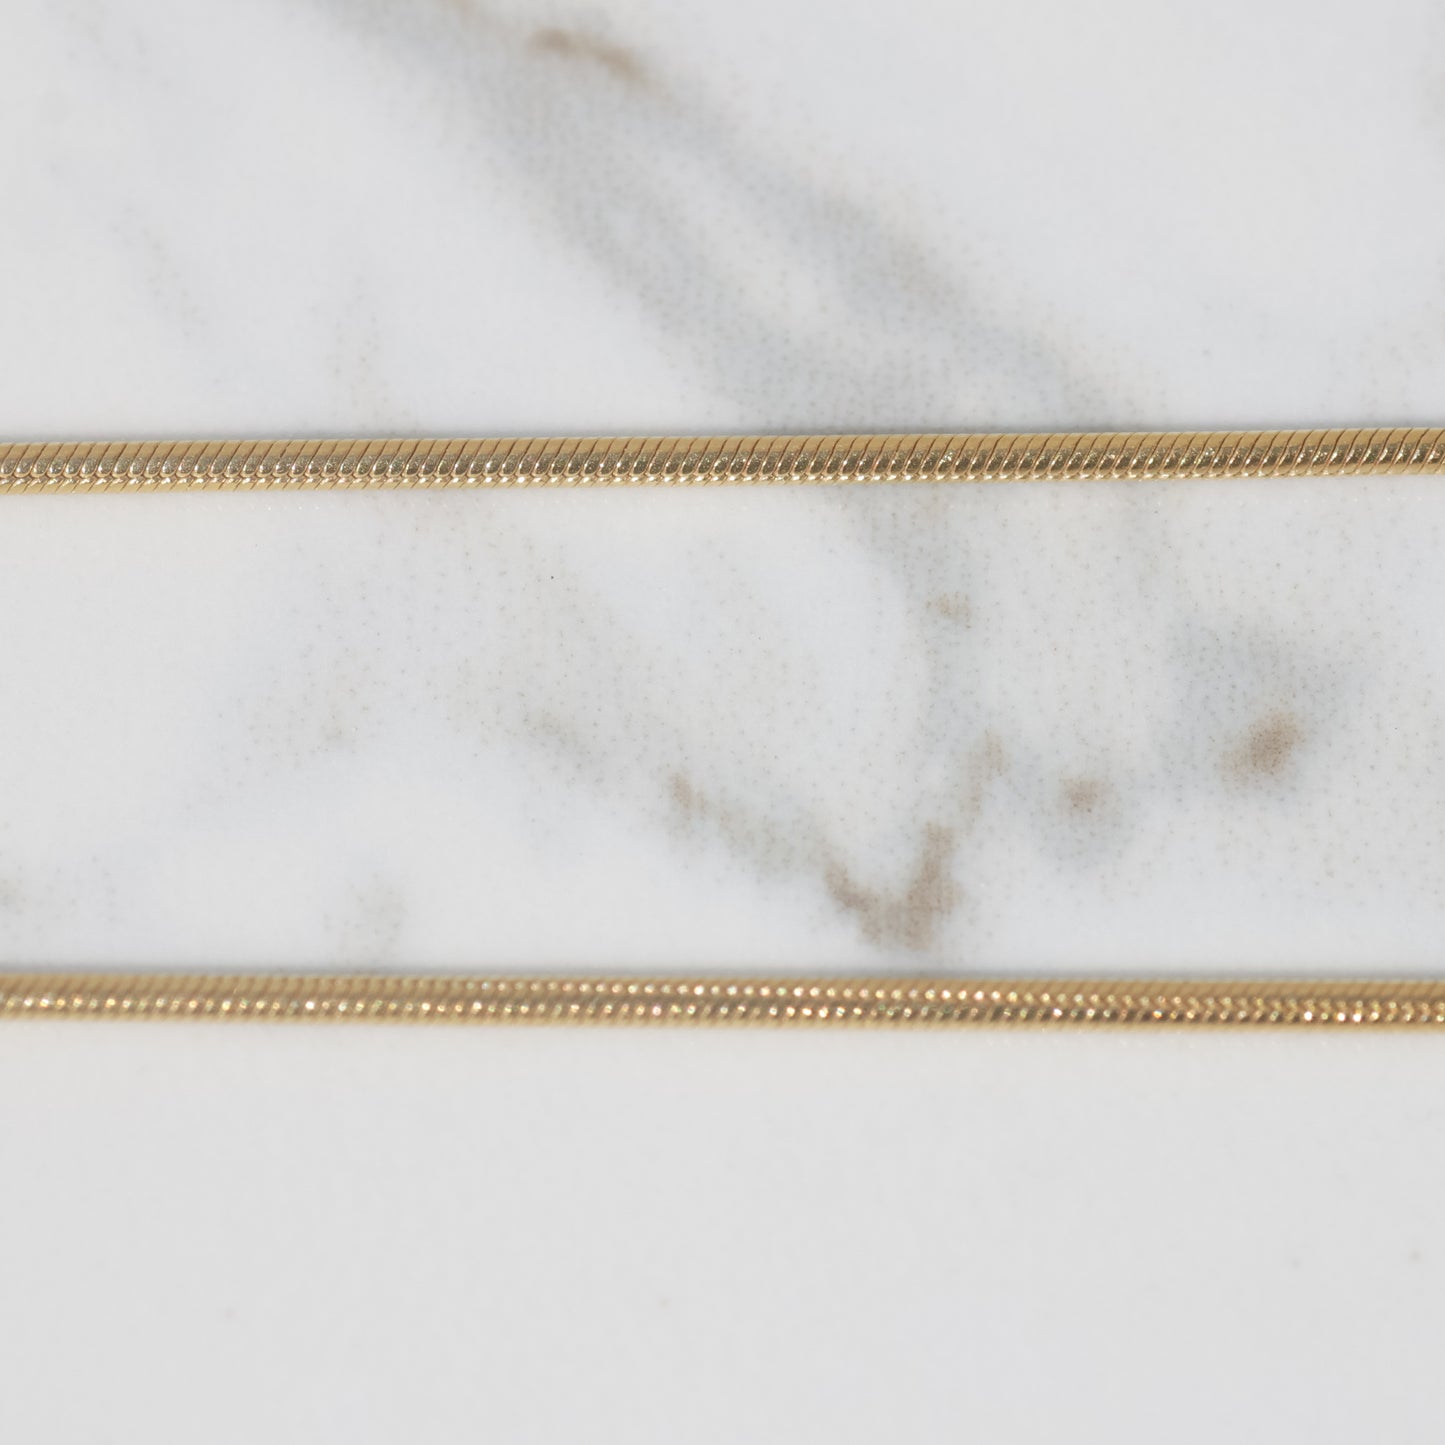 Vintage Snake Chain Necklace 18" 14k Gold